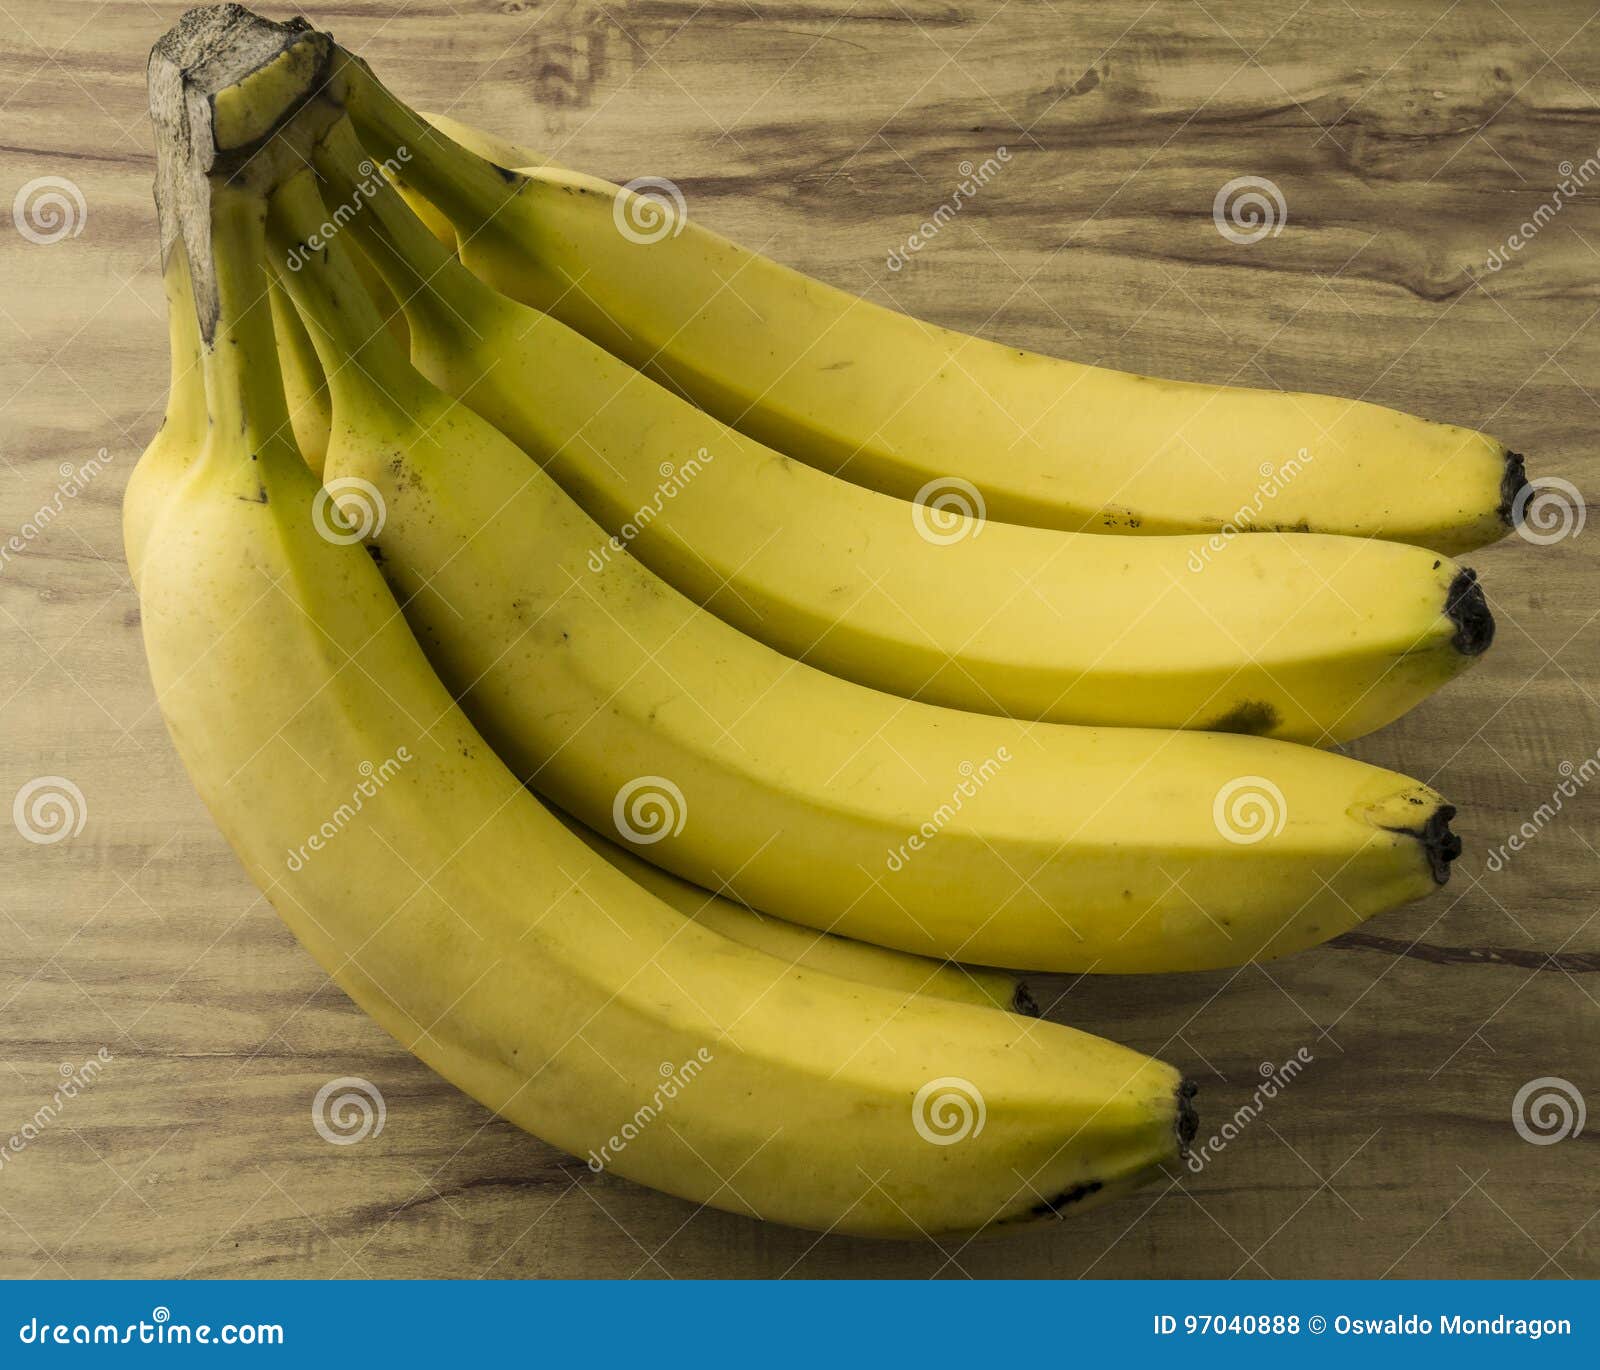 fresh natural banana bunch